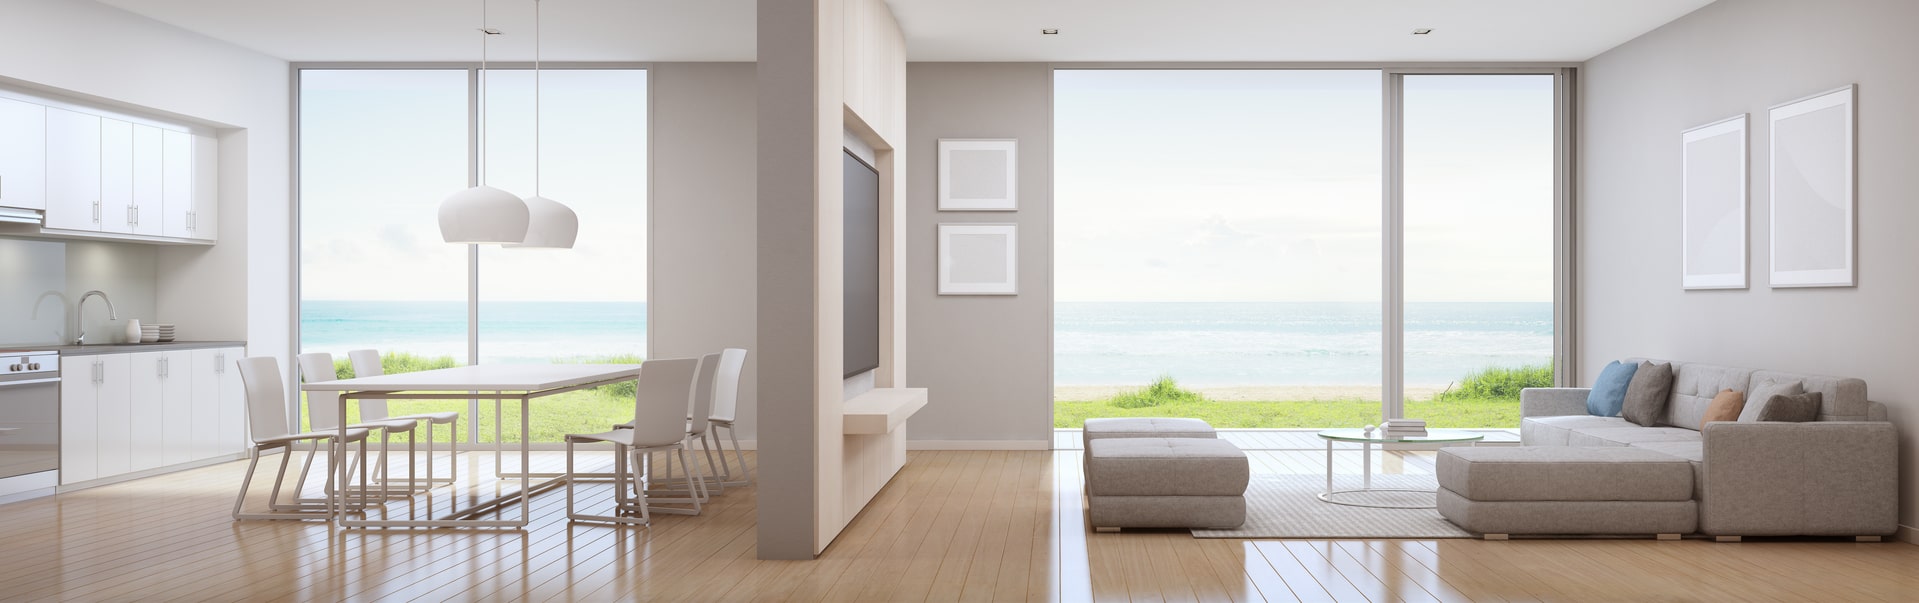 sea view kitchen dining living room luxury beach house modern design min